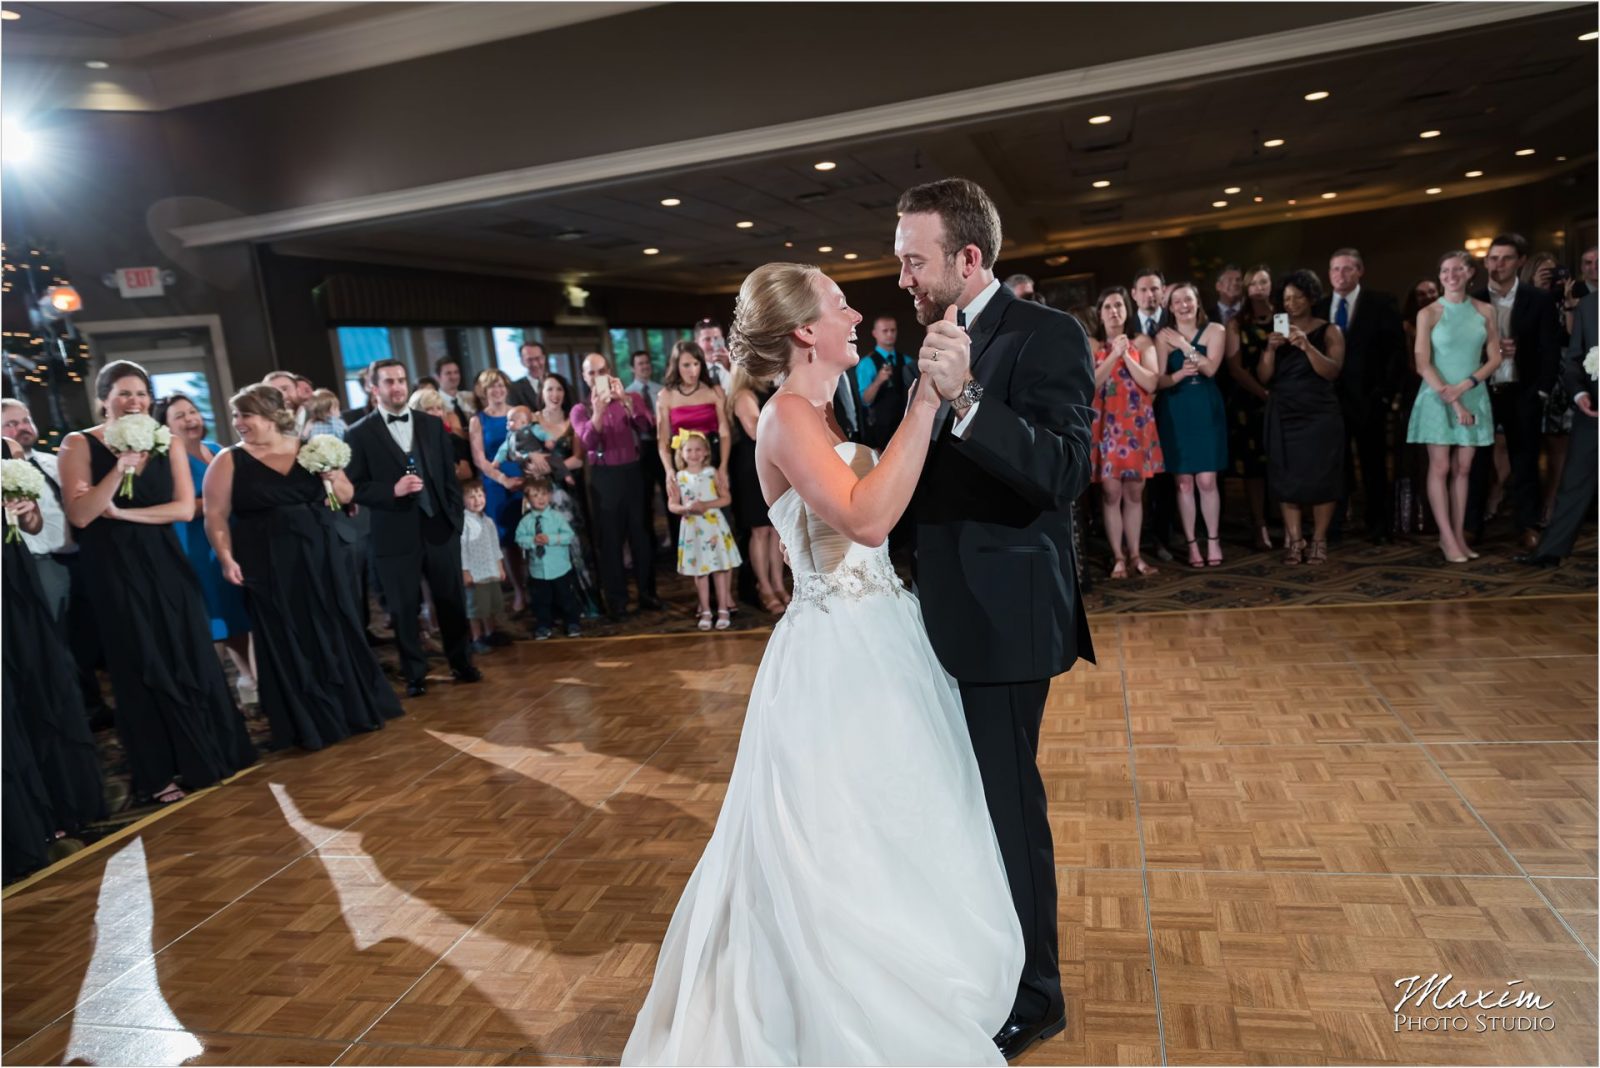 Drees Pavilion Covington Kentucky Wedding Reception Dance